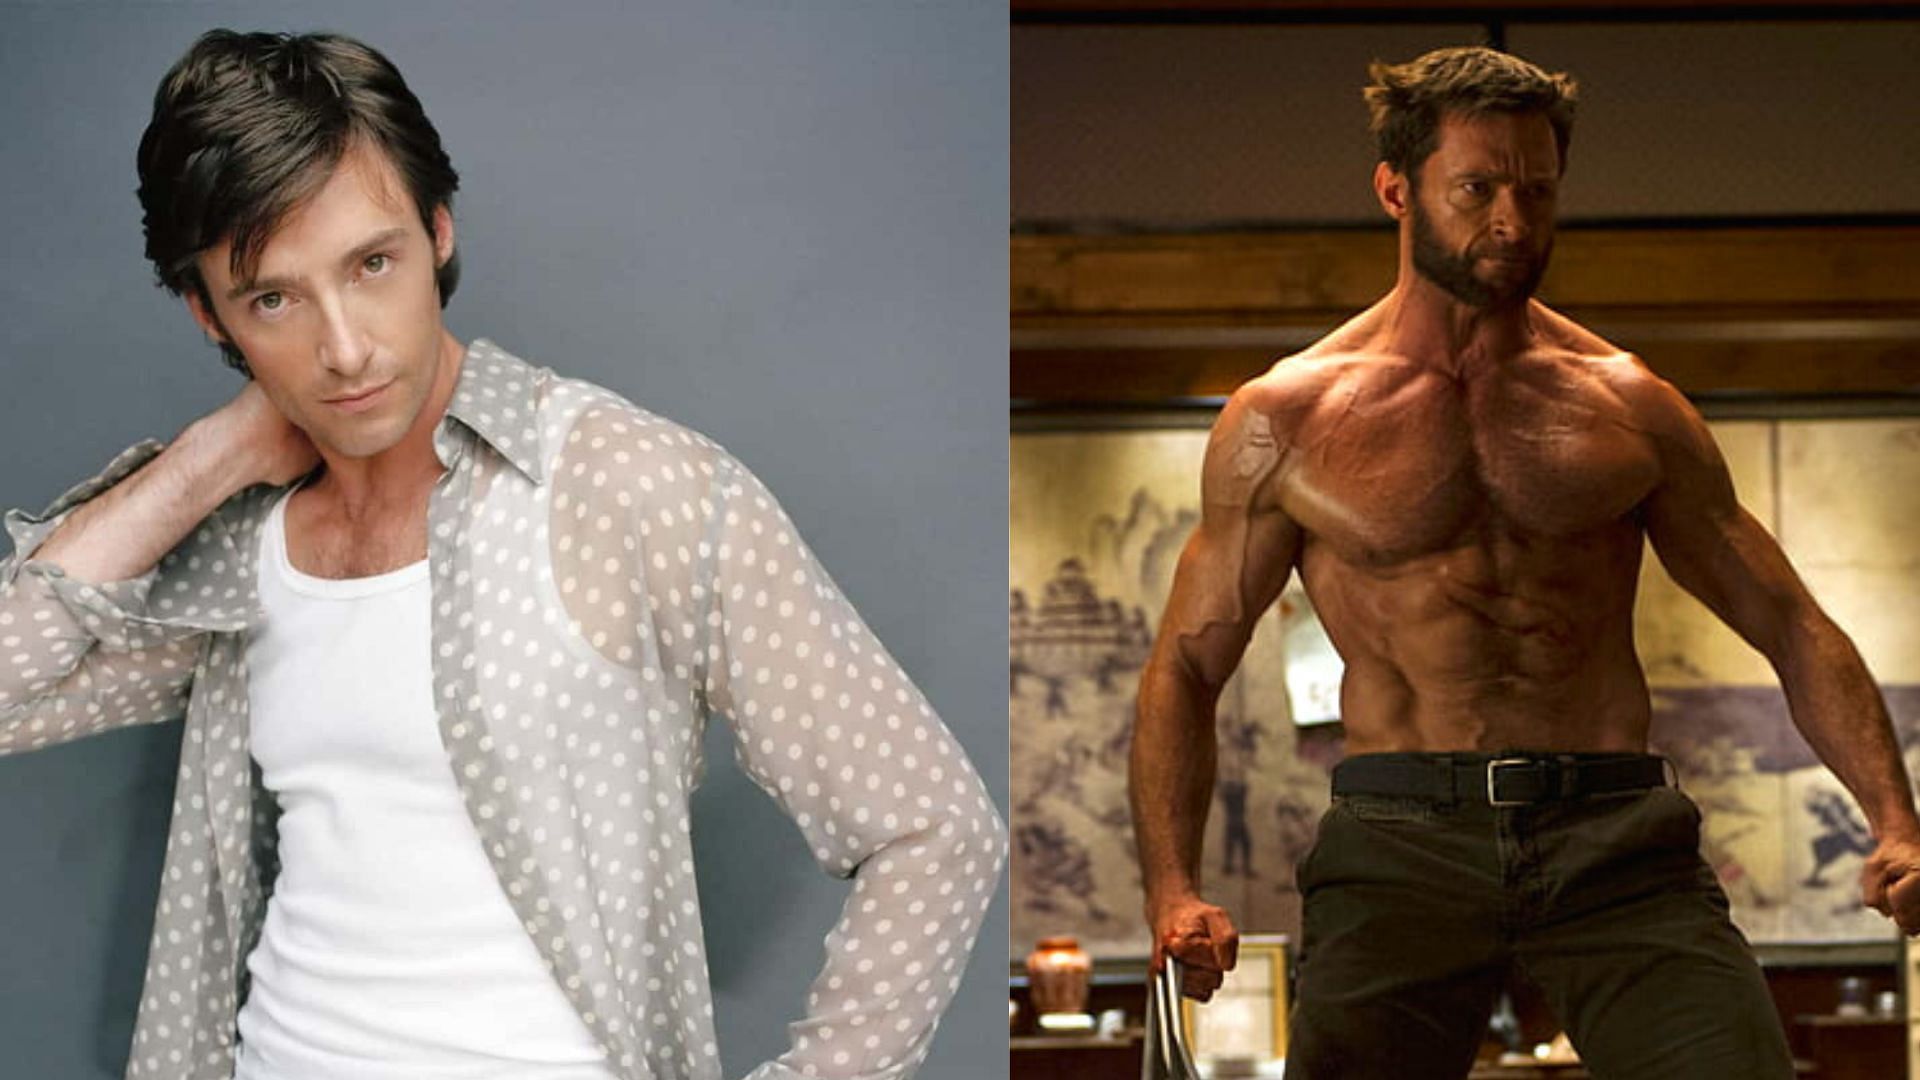 Hugh Jackman before Wolverine and superhero training (images via Short Central/Marvel/20th Century Fox)